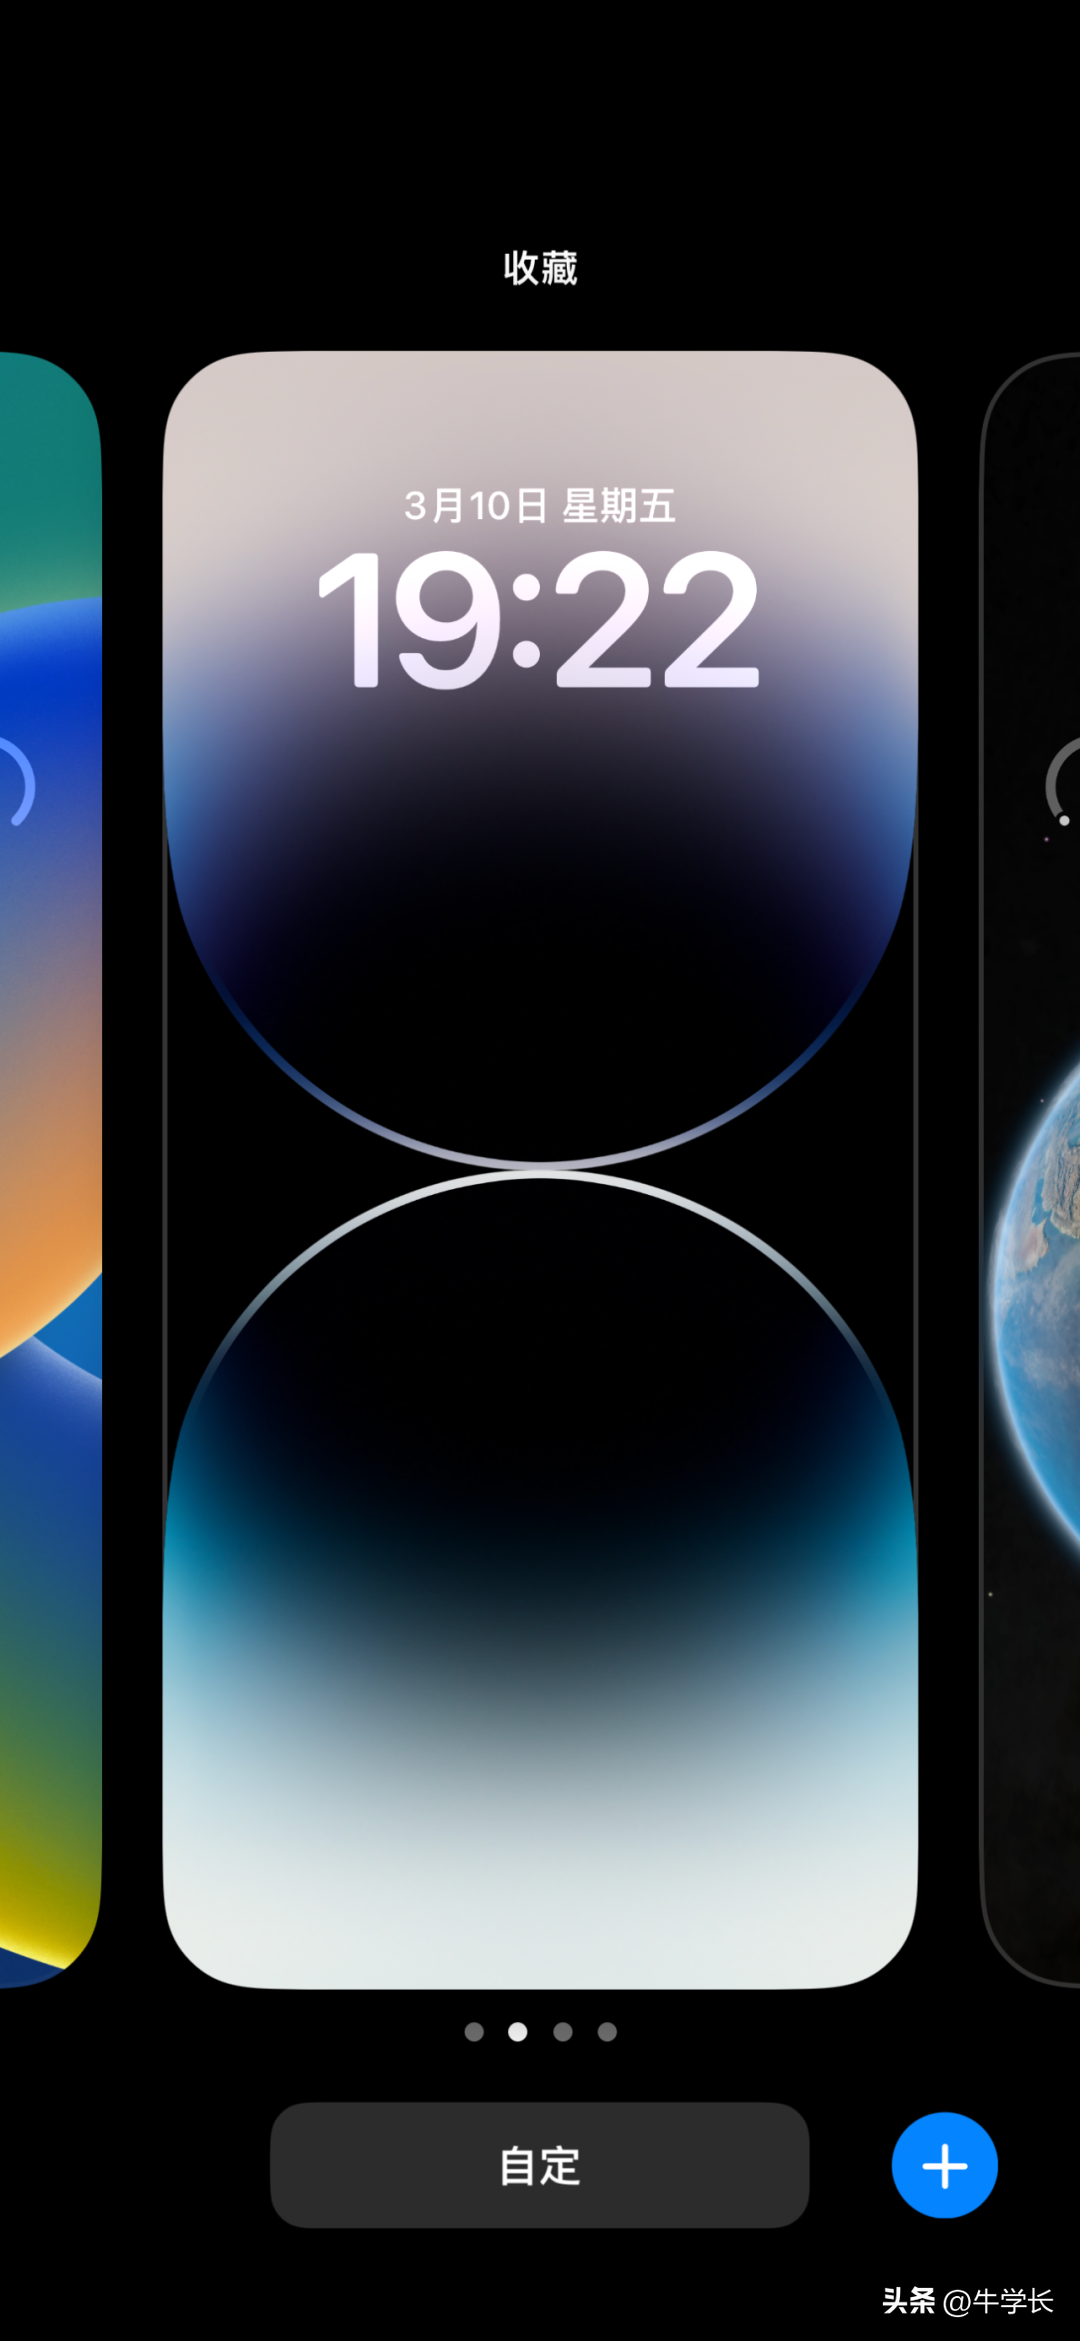 iOS16自定义锁屏，让你的iPhone轻松编辑个性化锁屏界面！